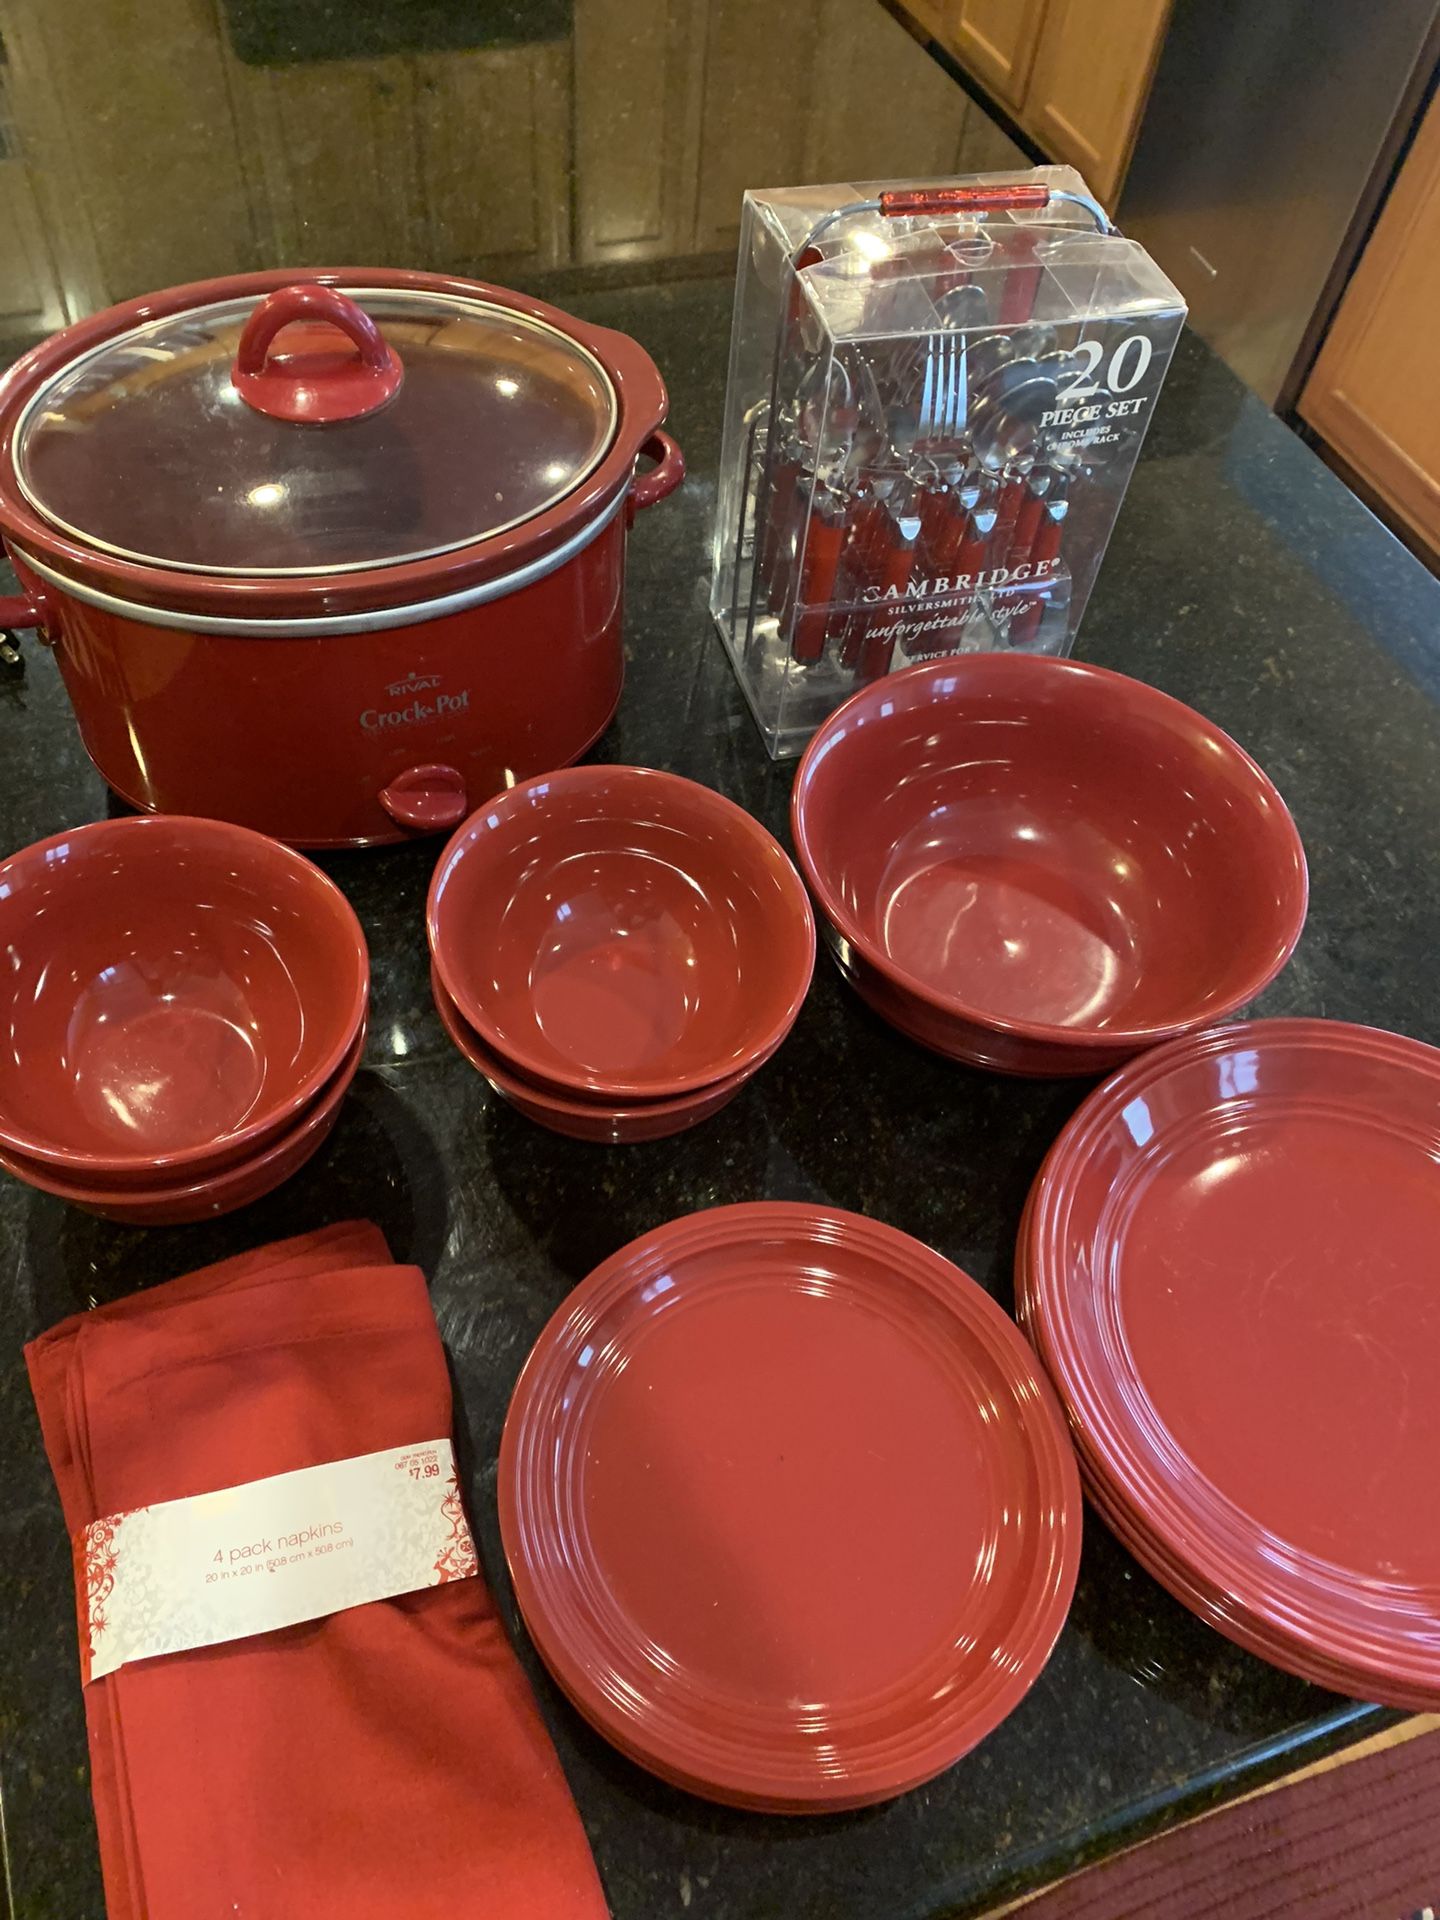 Set of Tableware and crockpot